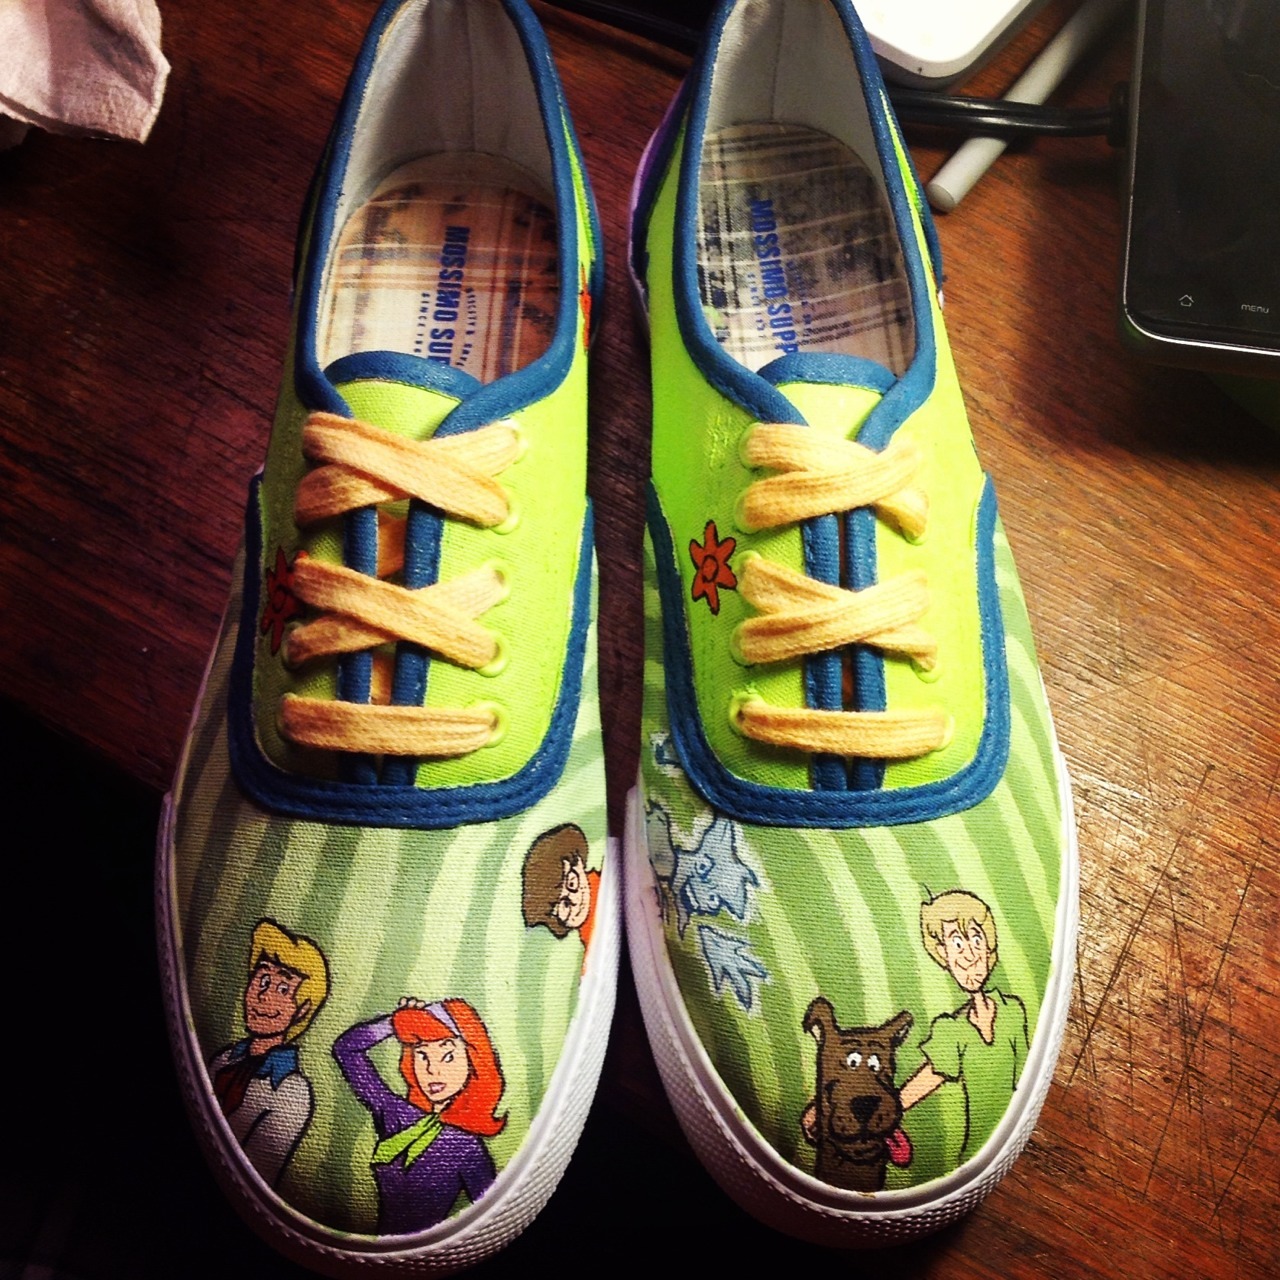 Custom Vans FTW | youngandpretentious: Scooby doo shoes I did a...